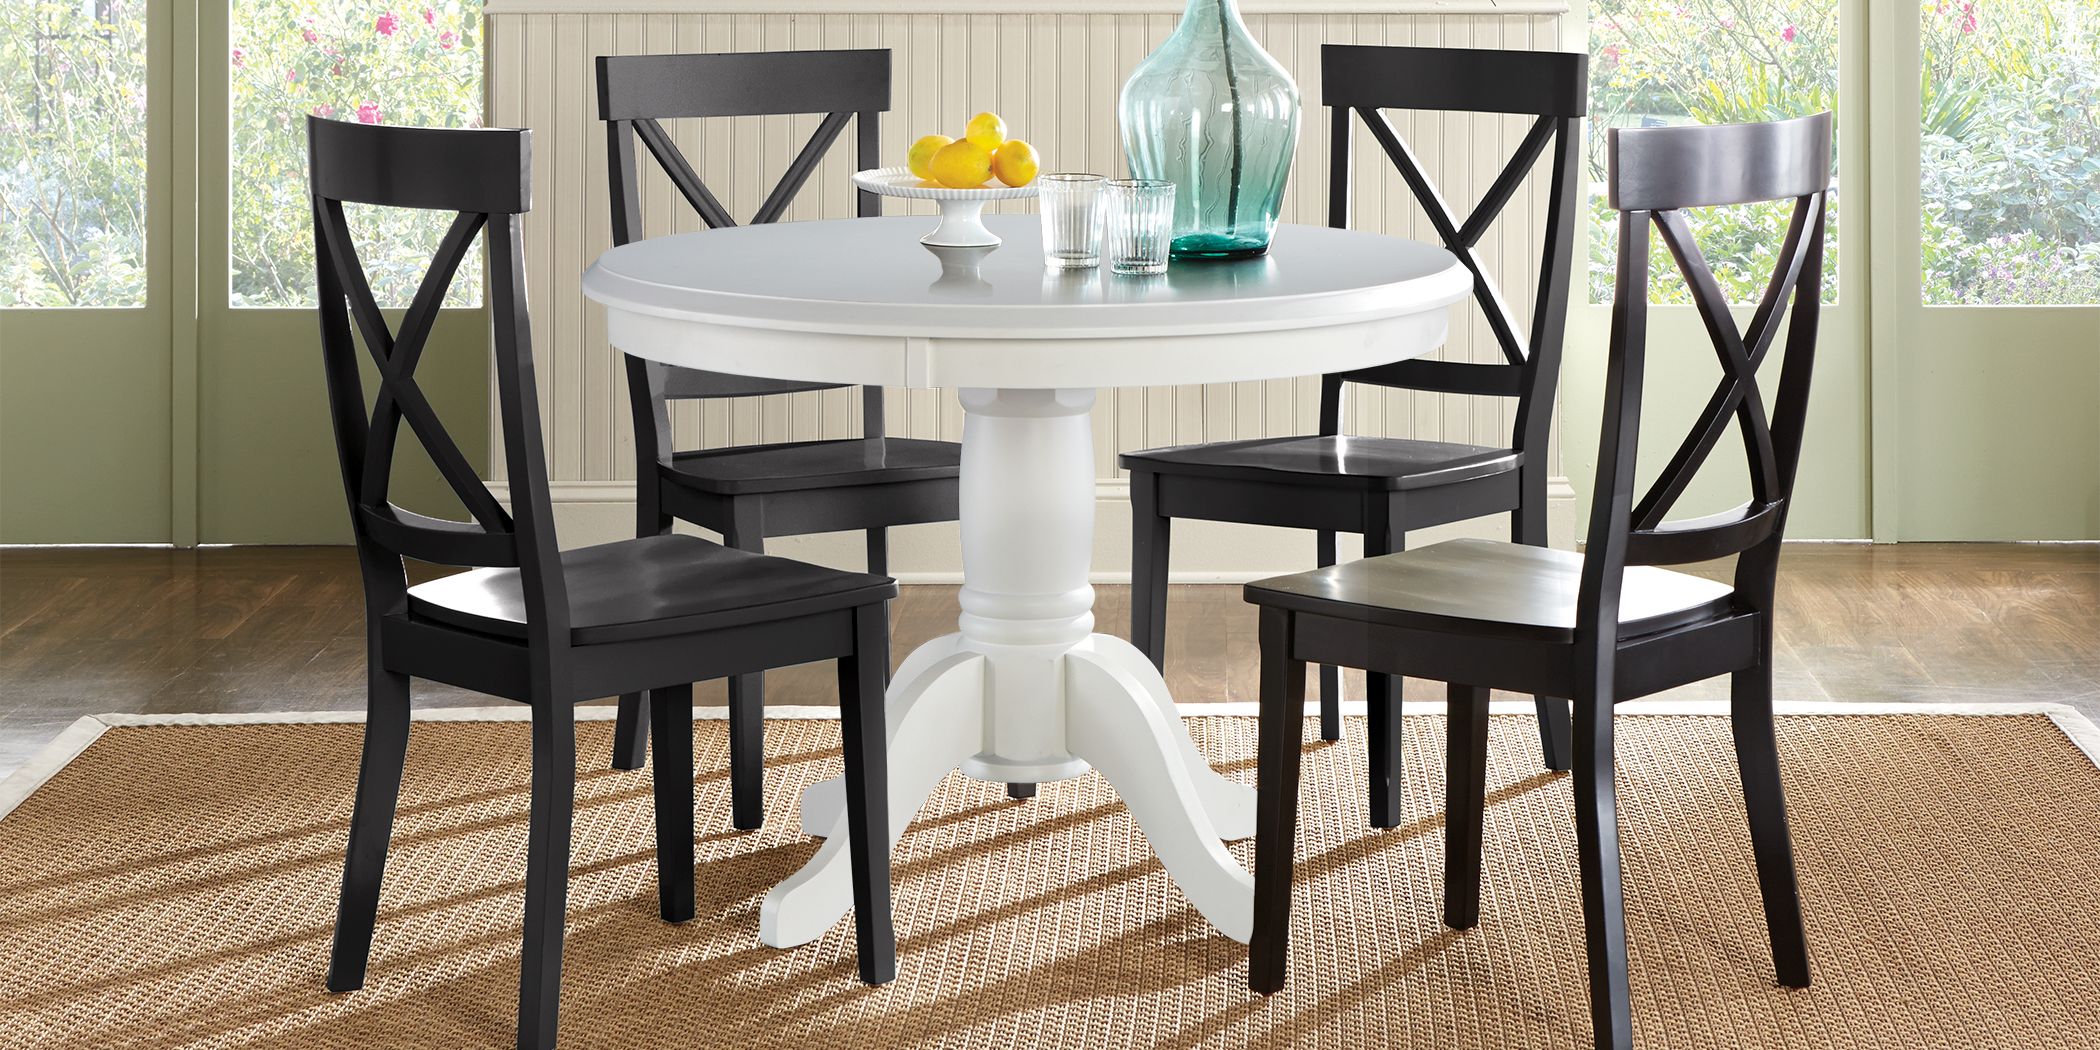 Brynwood White 5 Pc Round Dining Set, White Round Dining Table Chairs